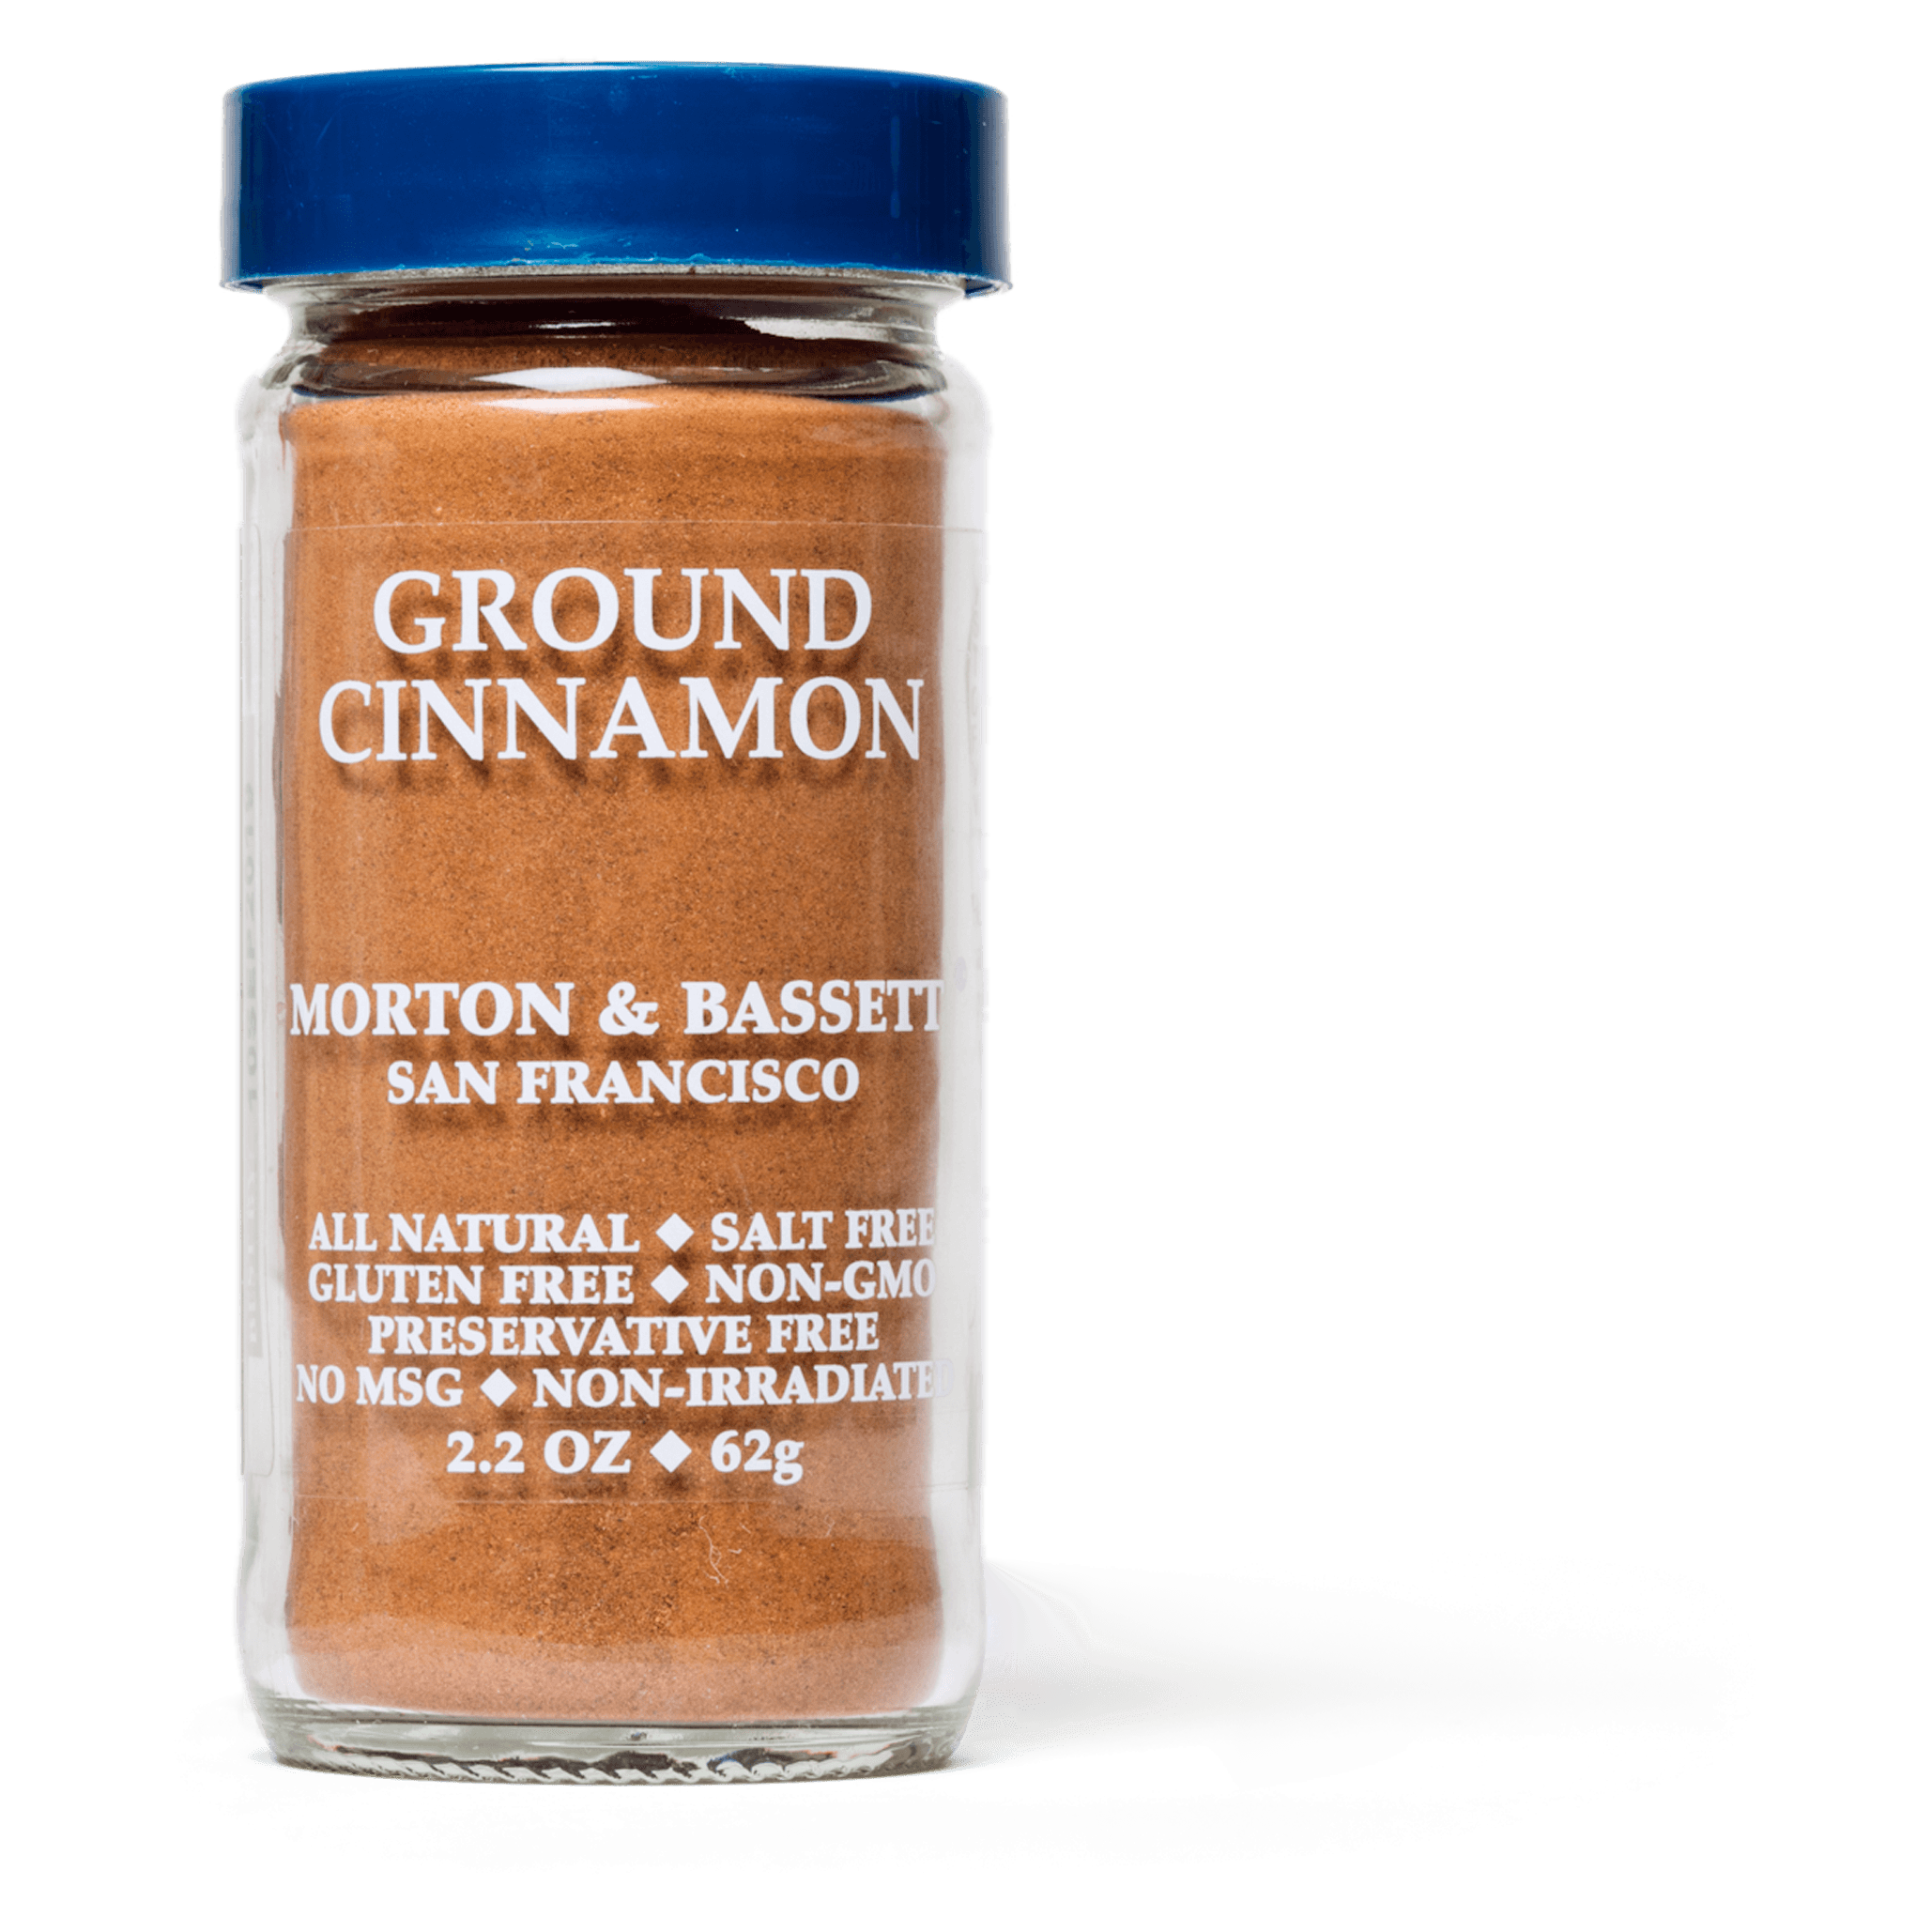 SIL_Cinnamon_Morton___Bassett_Spices_Ground_Cinnamon.png